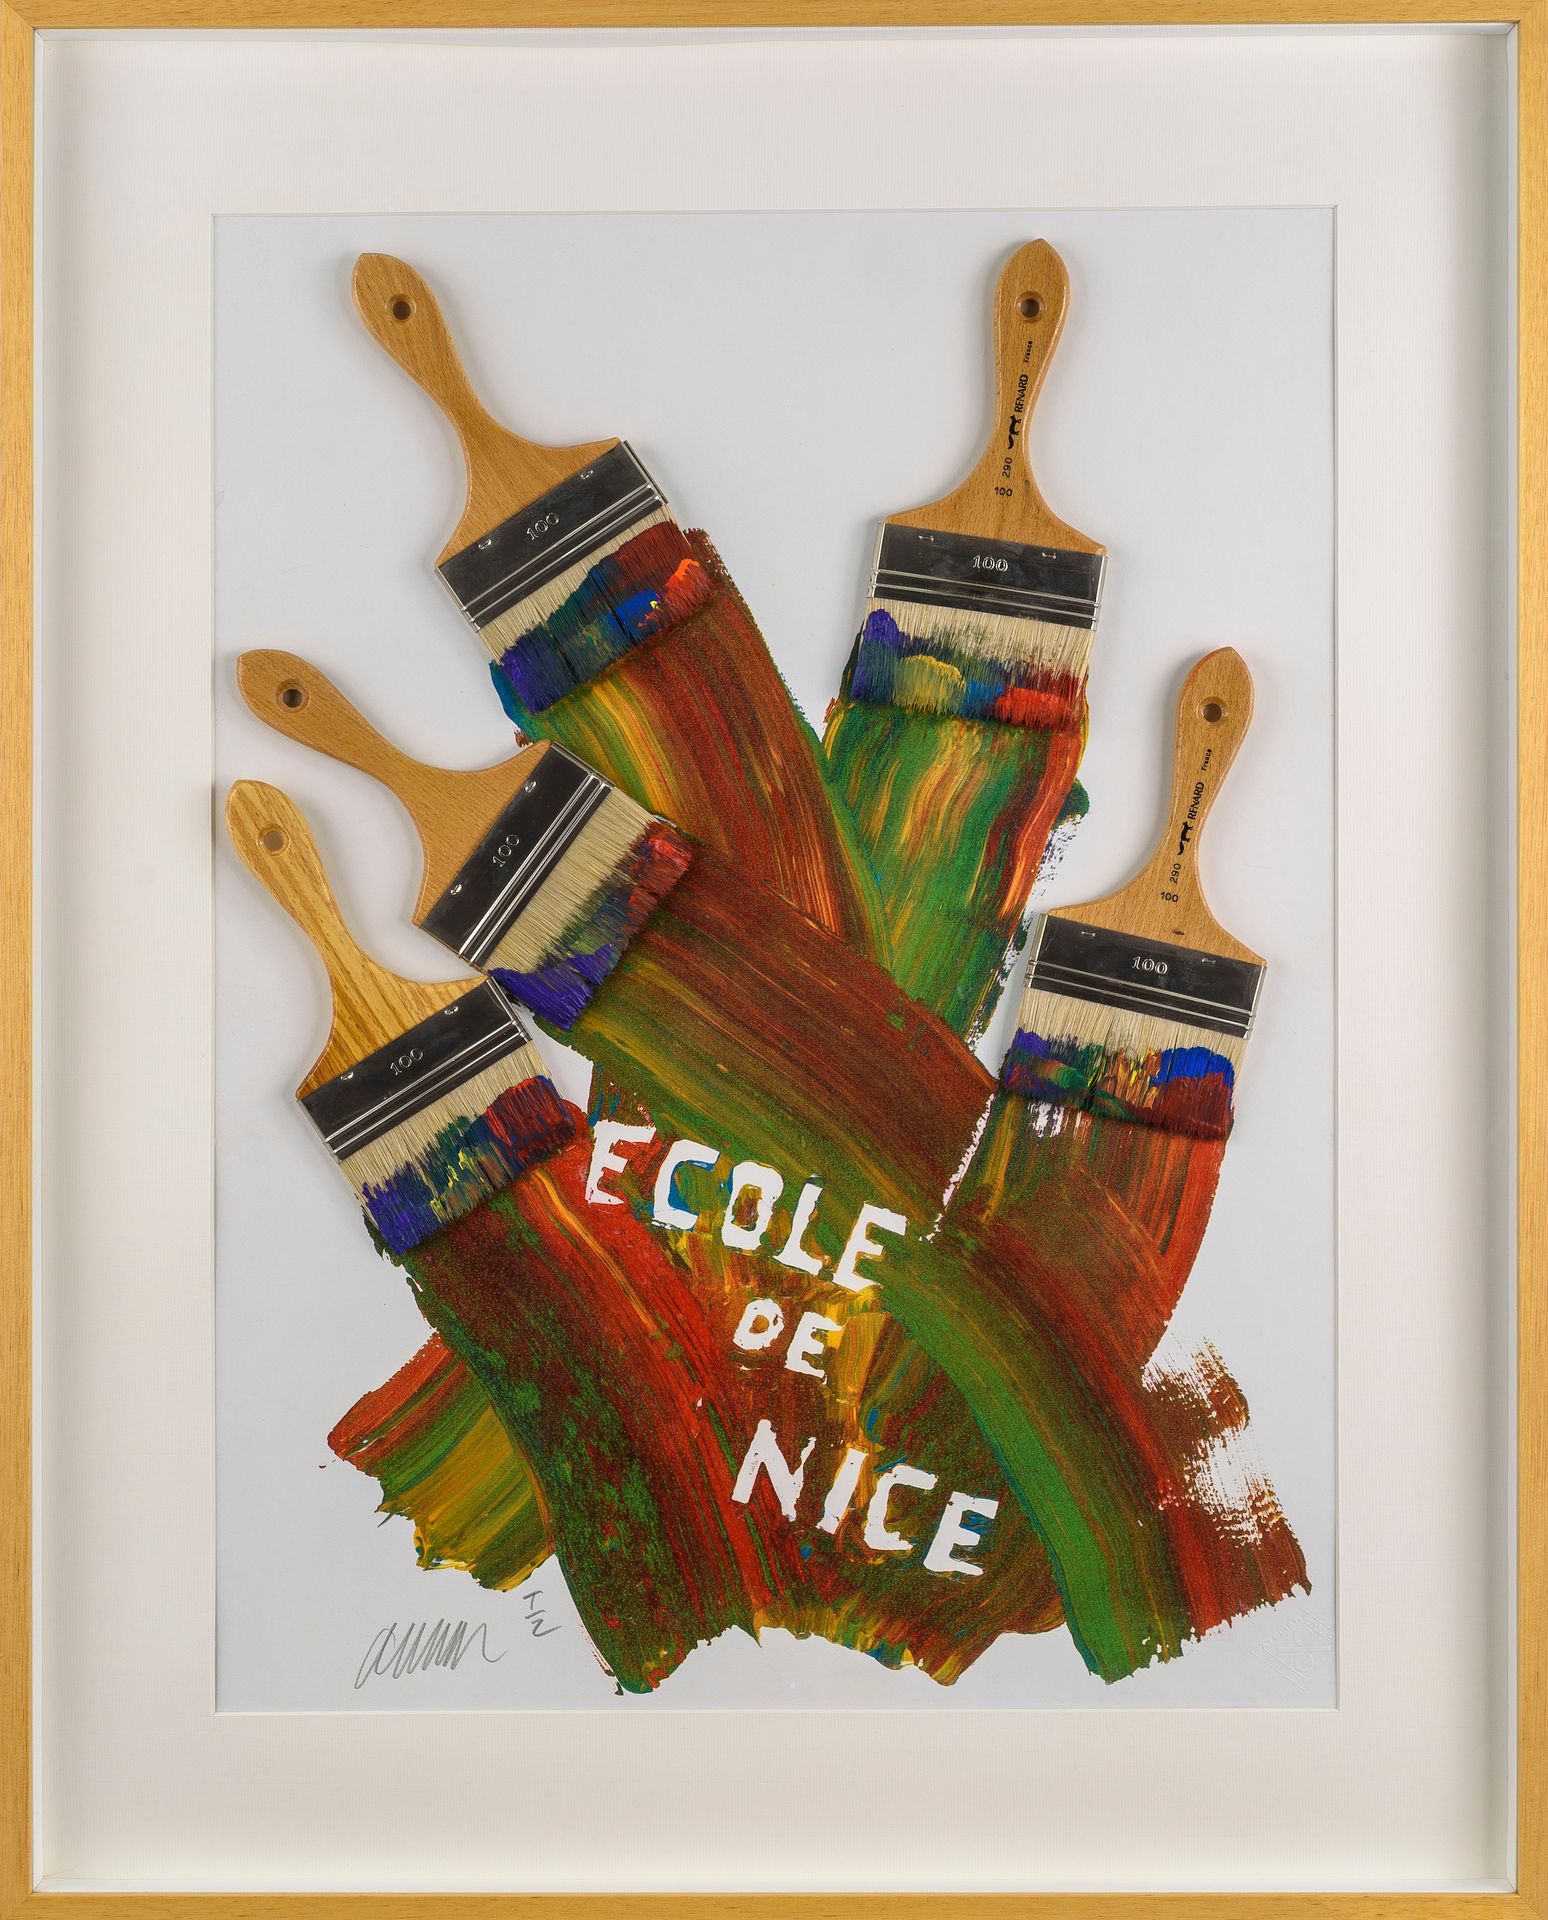 Null 阿尔曼(1928-2005)

尼斯学校, 1987

用真正的毛笔进行摄影凹版印刷

以铅笔签名并编号的T/Z

65 x 50厘米

在艺术家的作&hellip;